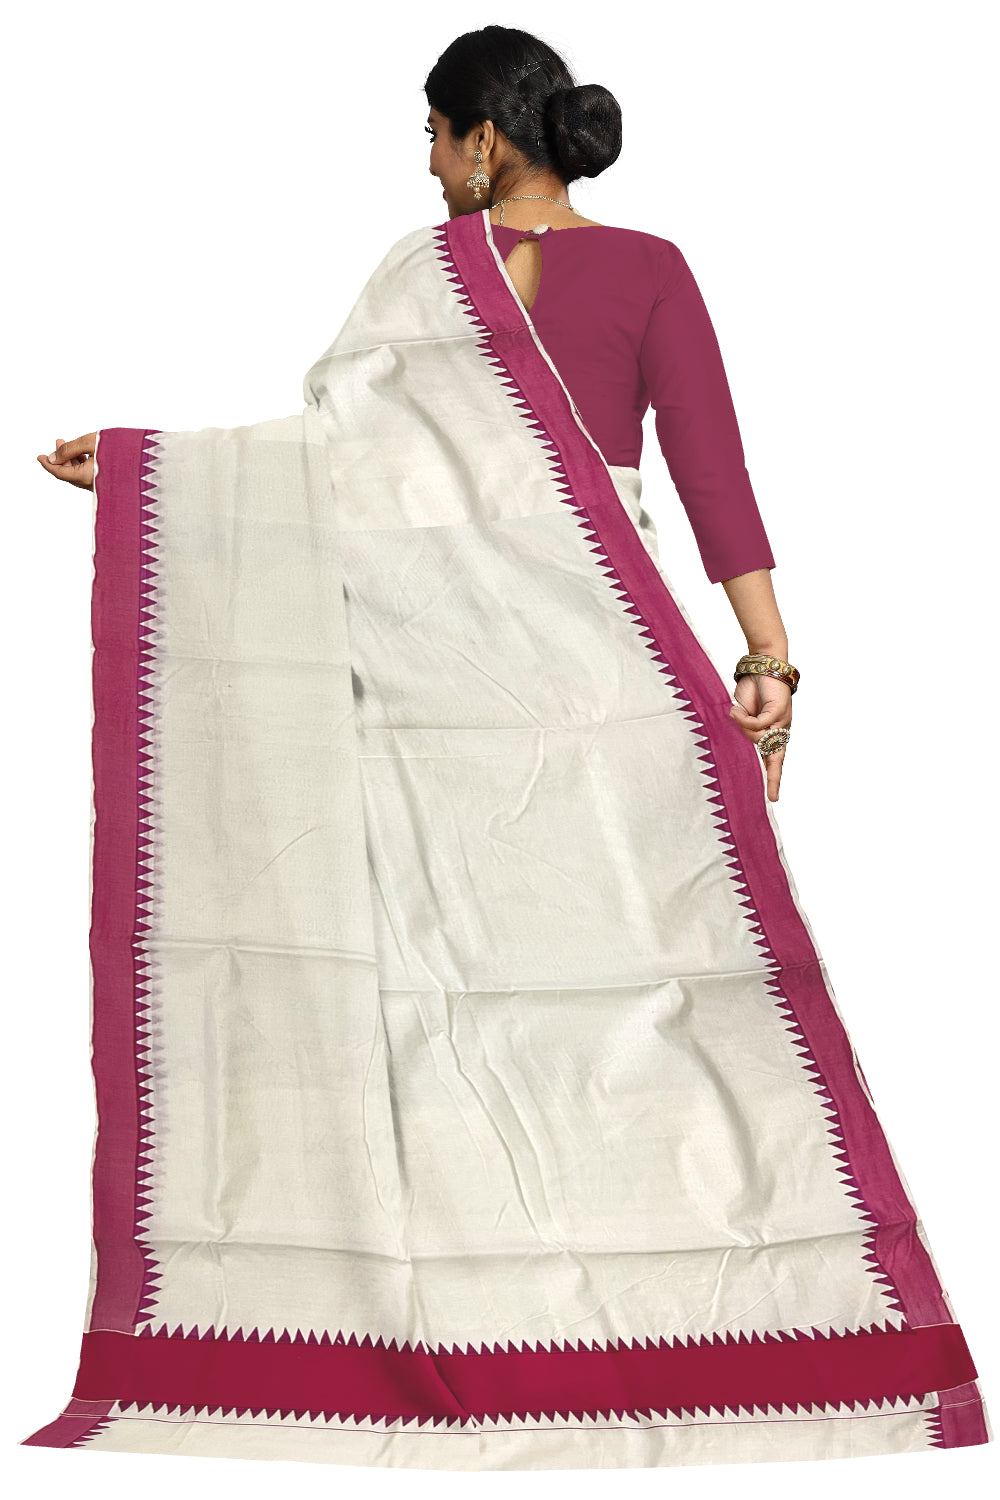 Kerala Pure Cotton Saree with Bright Magenta Temple Block Prints on Border